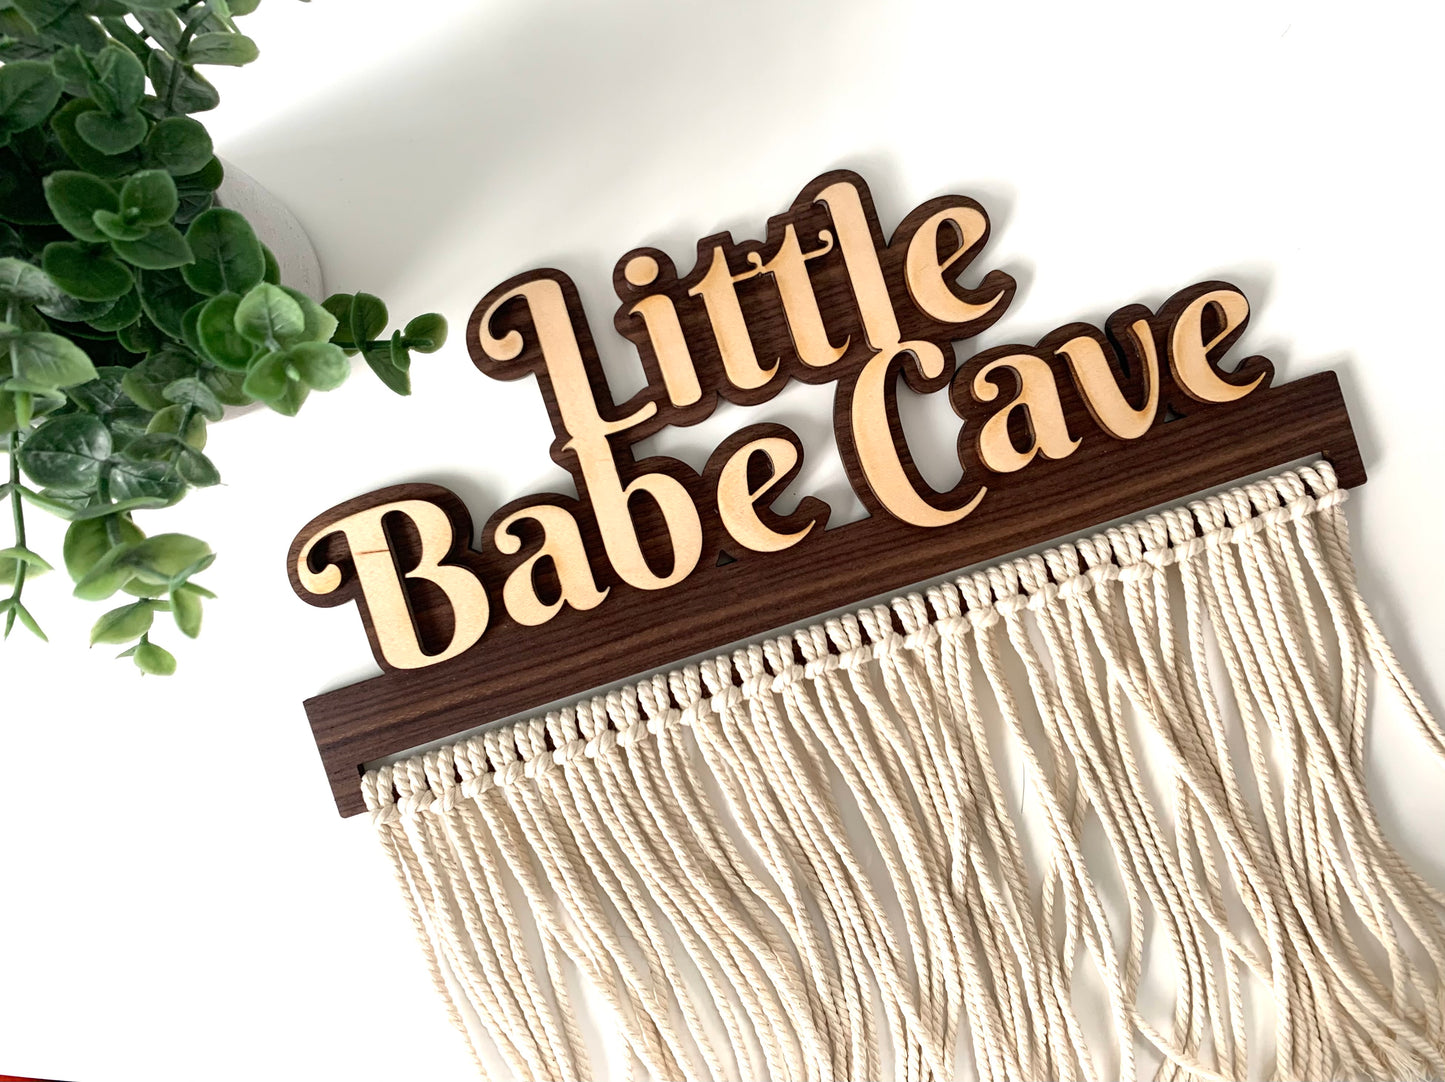 Little Babe Cave Macramé Sign